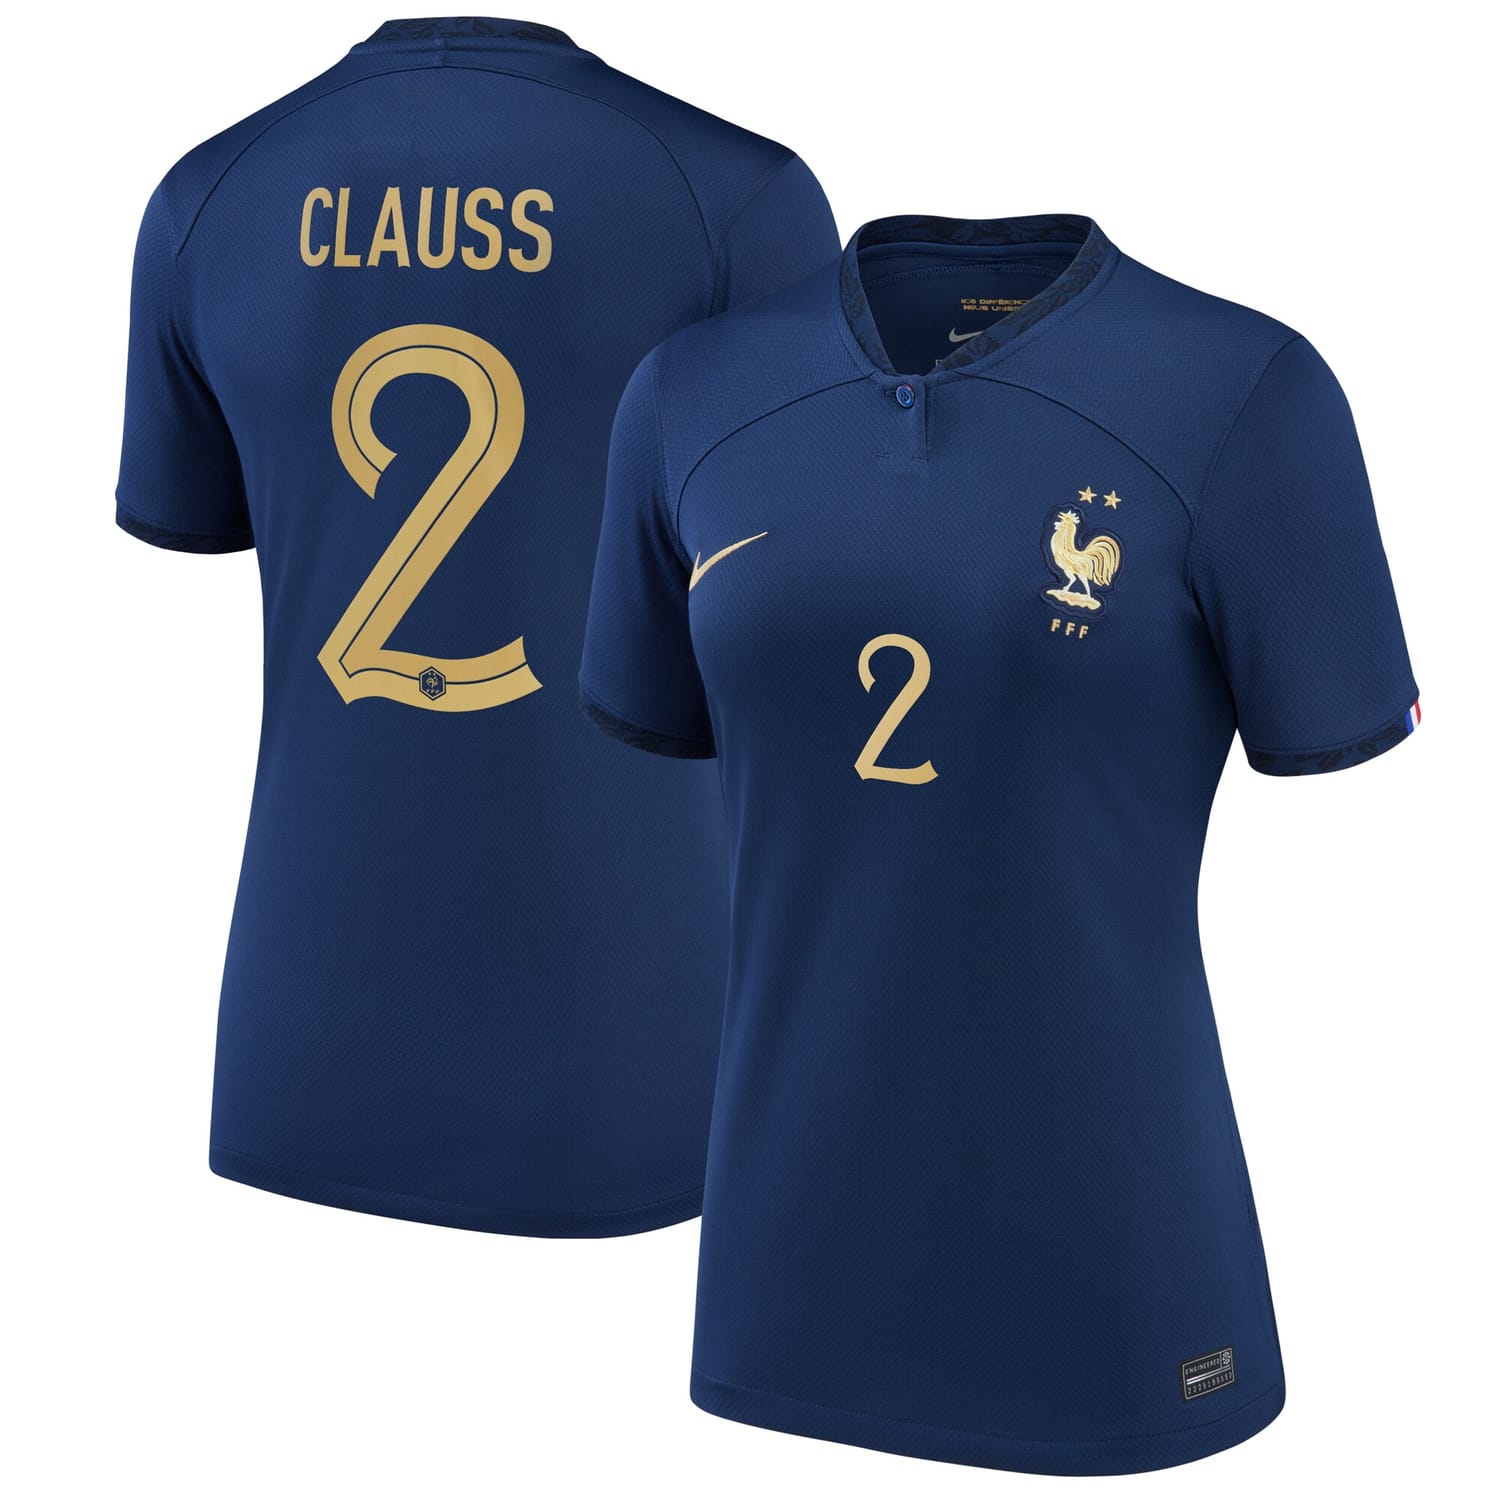 France National Team Home Jersey Shirt 2022 player Jonathan Clauss 2 printing for Women